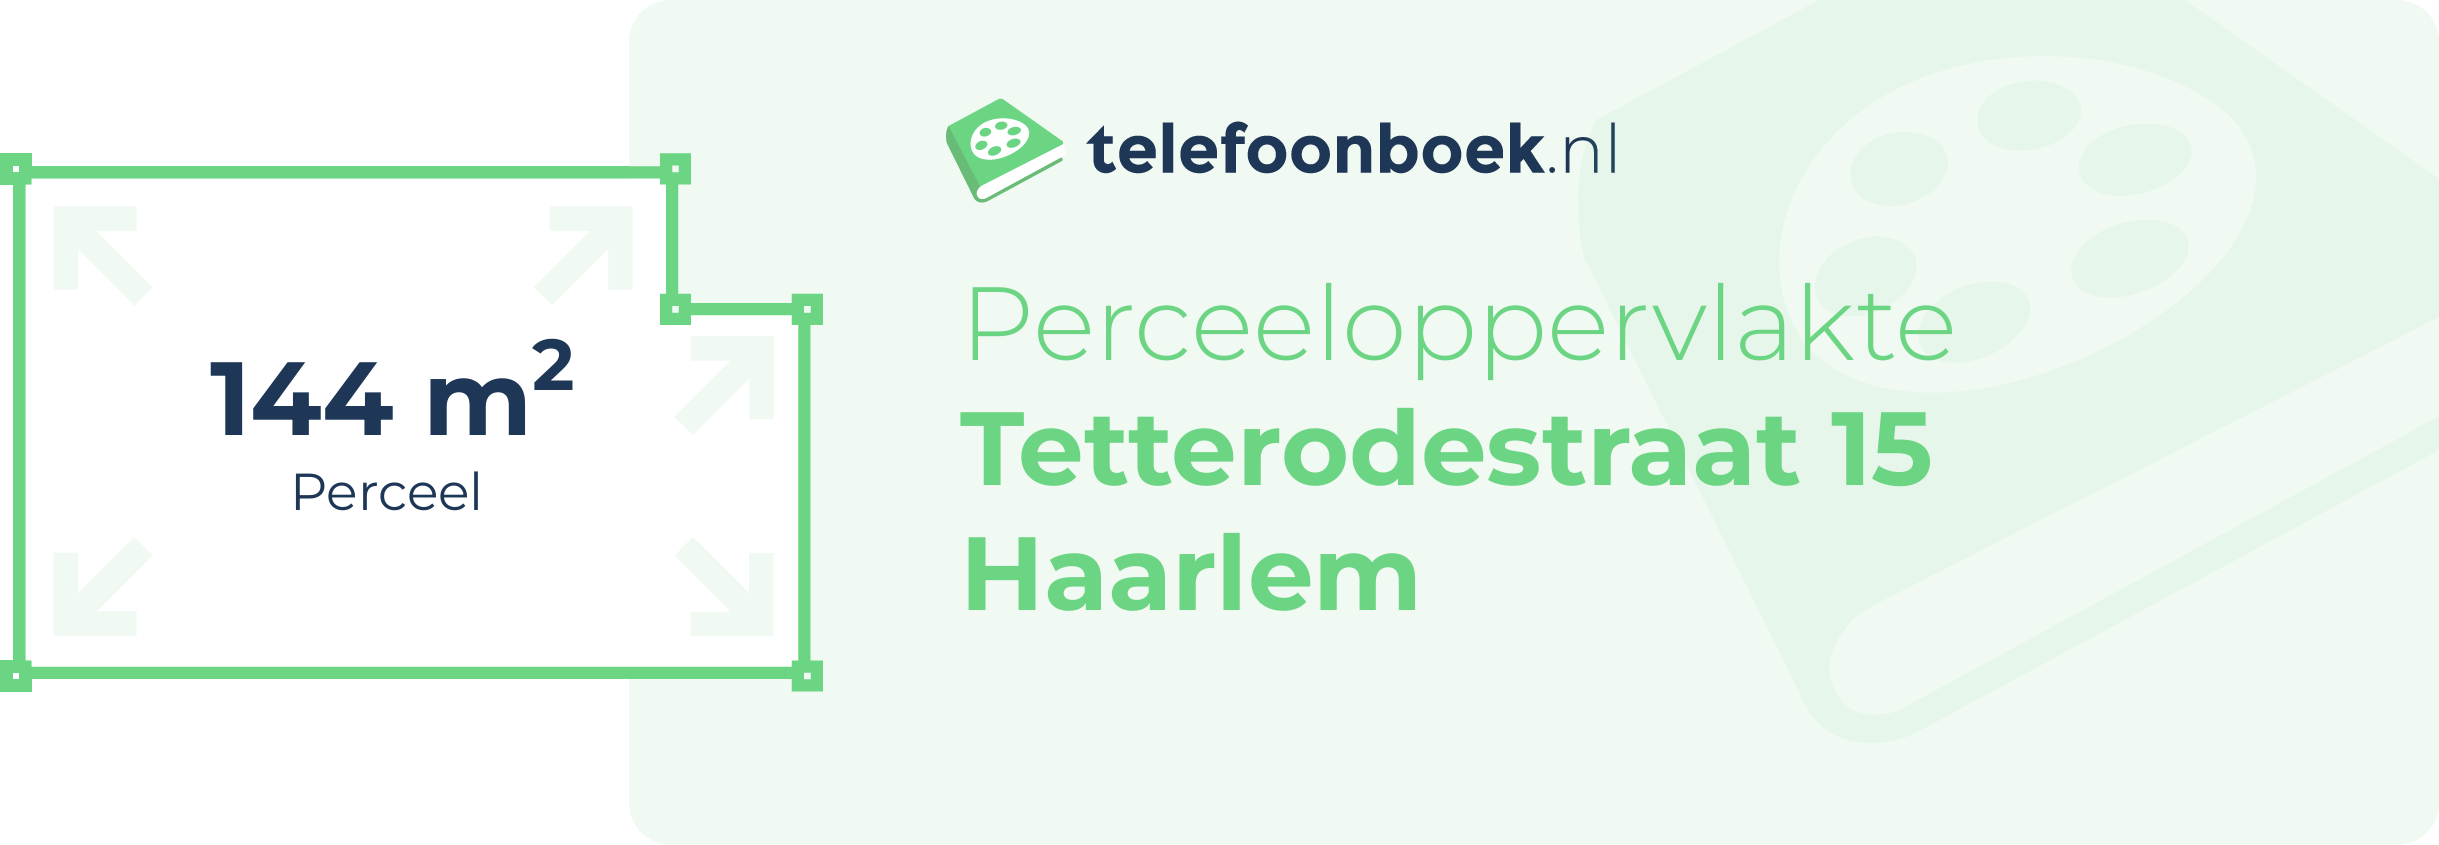 Perceeloppervlakte Tetterodestraat 15 Haarlem